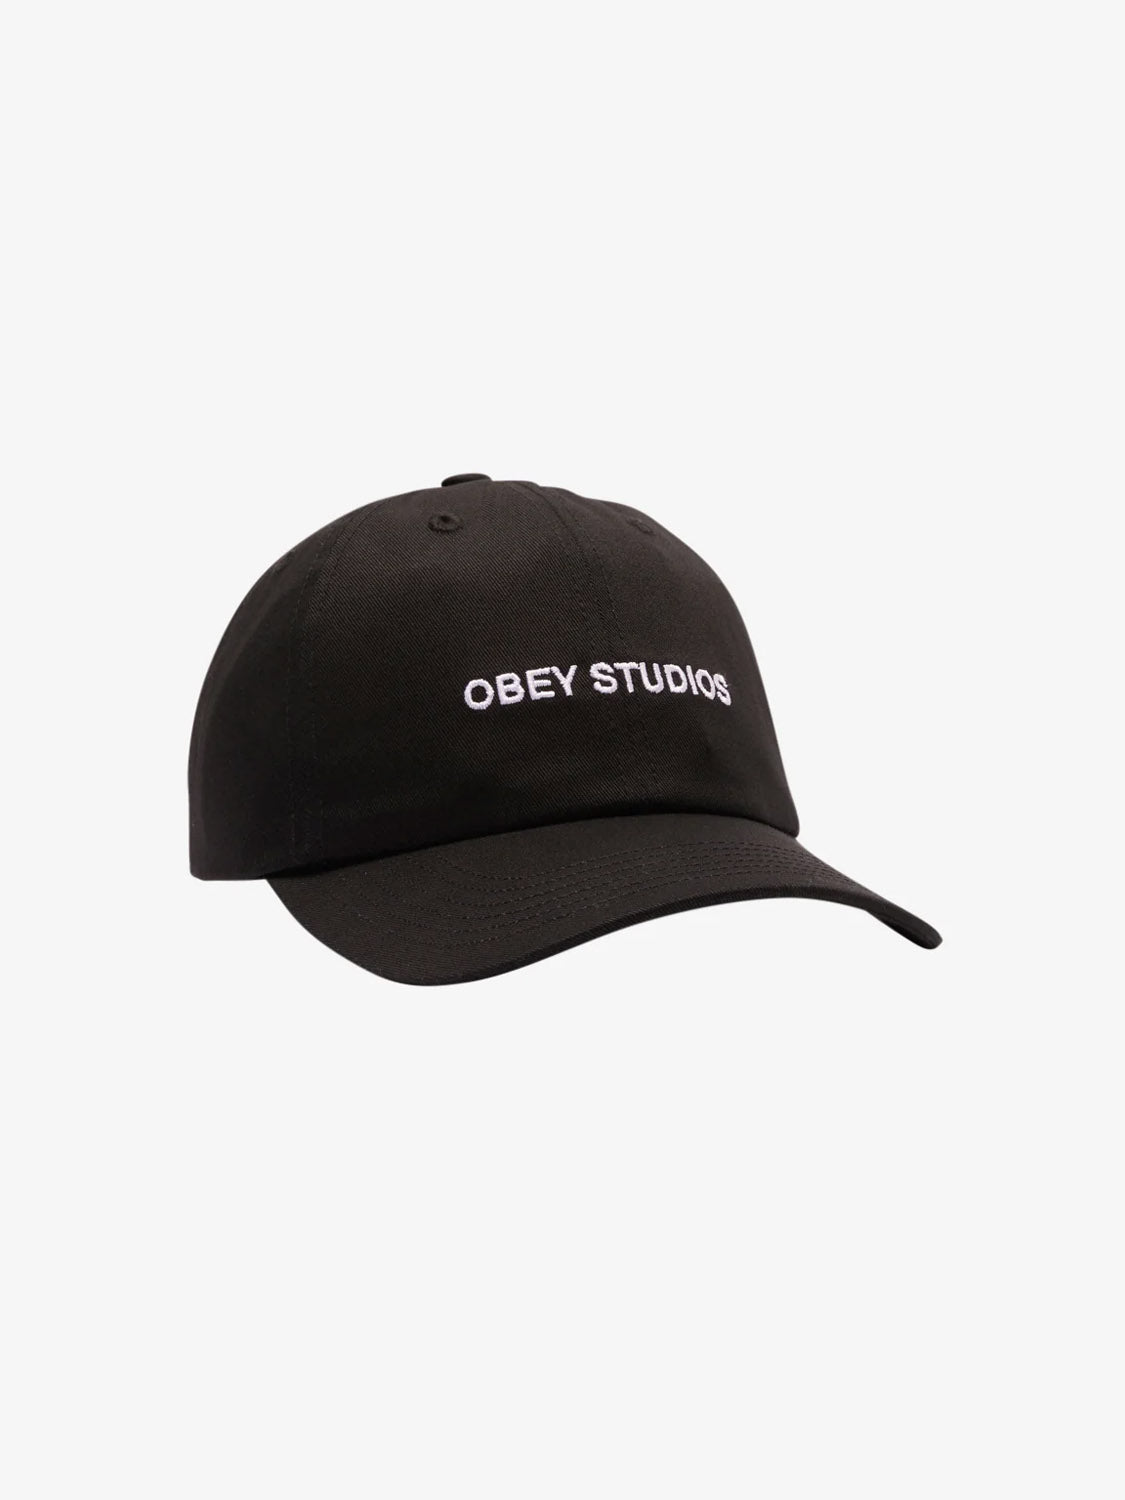 Obey Studio Strap Back Hat